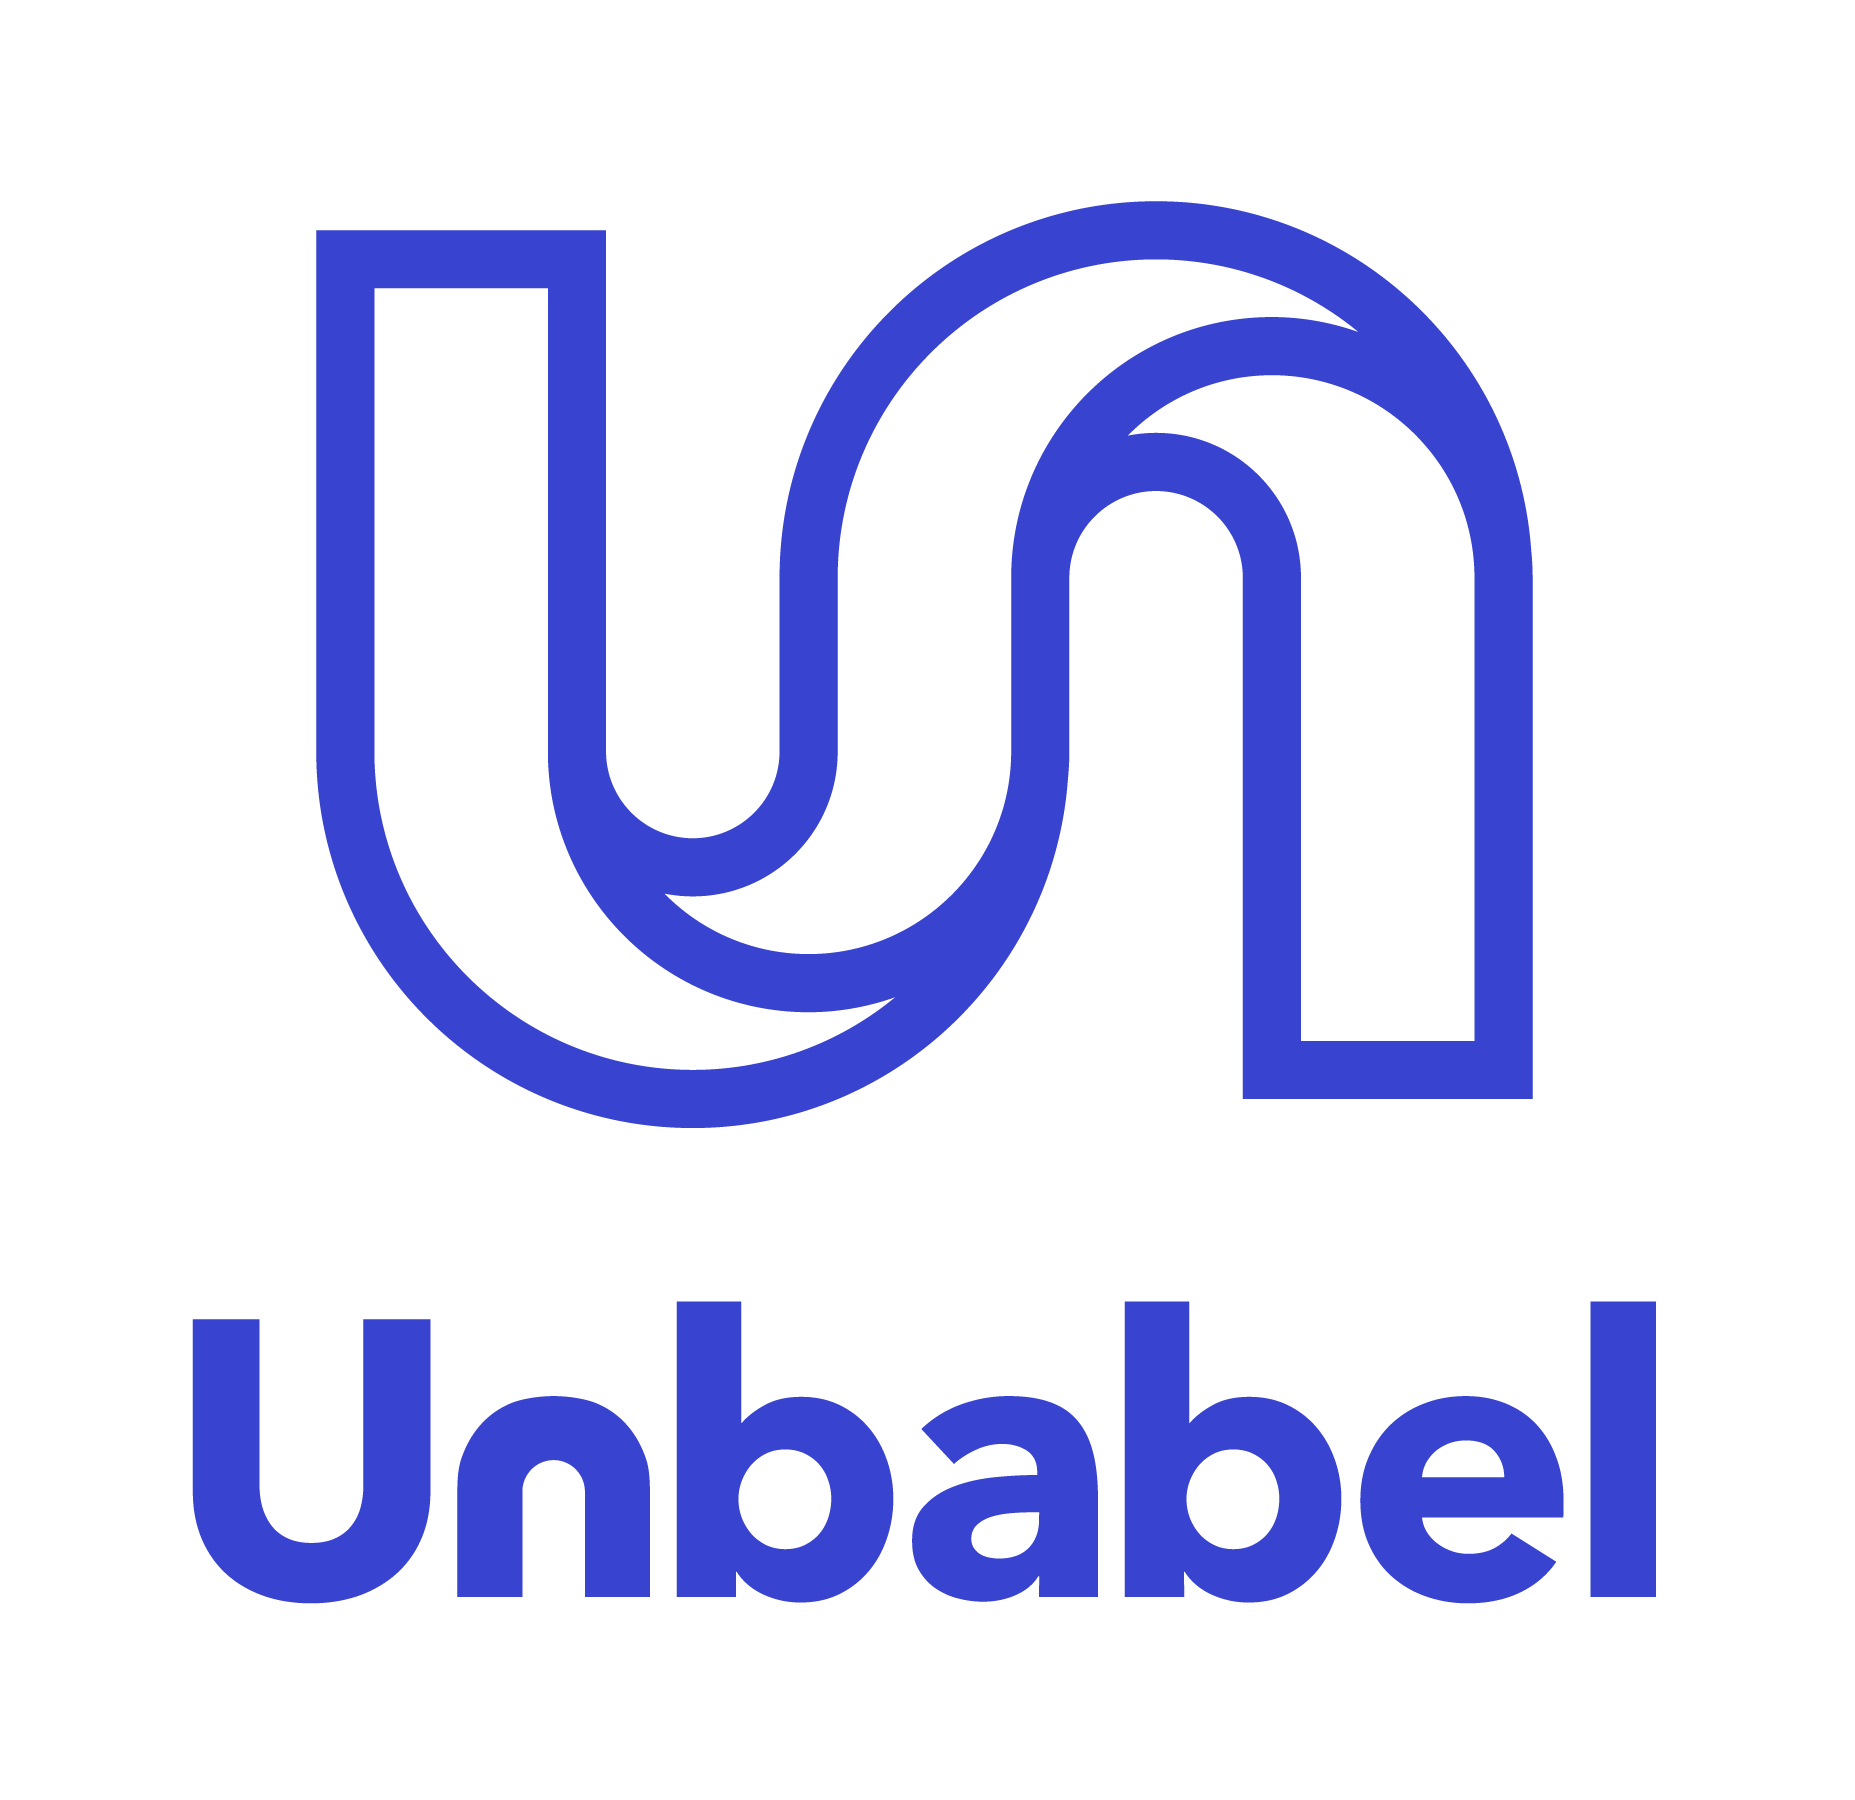 Unbabel